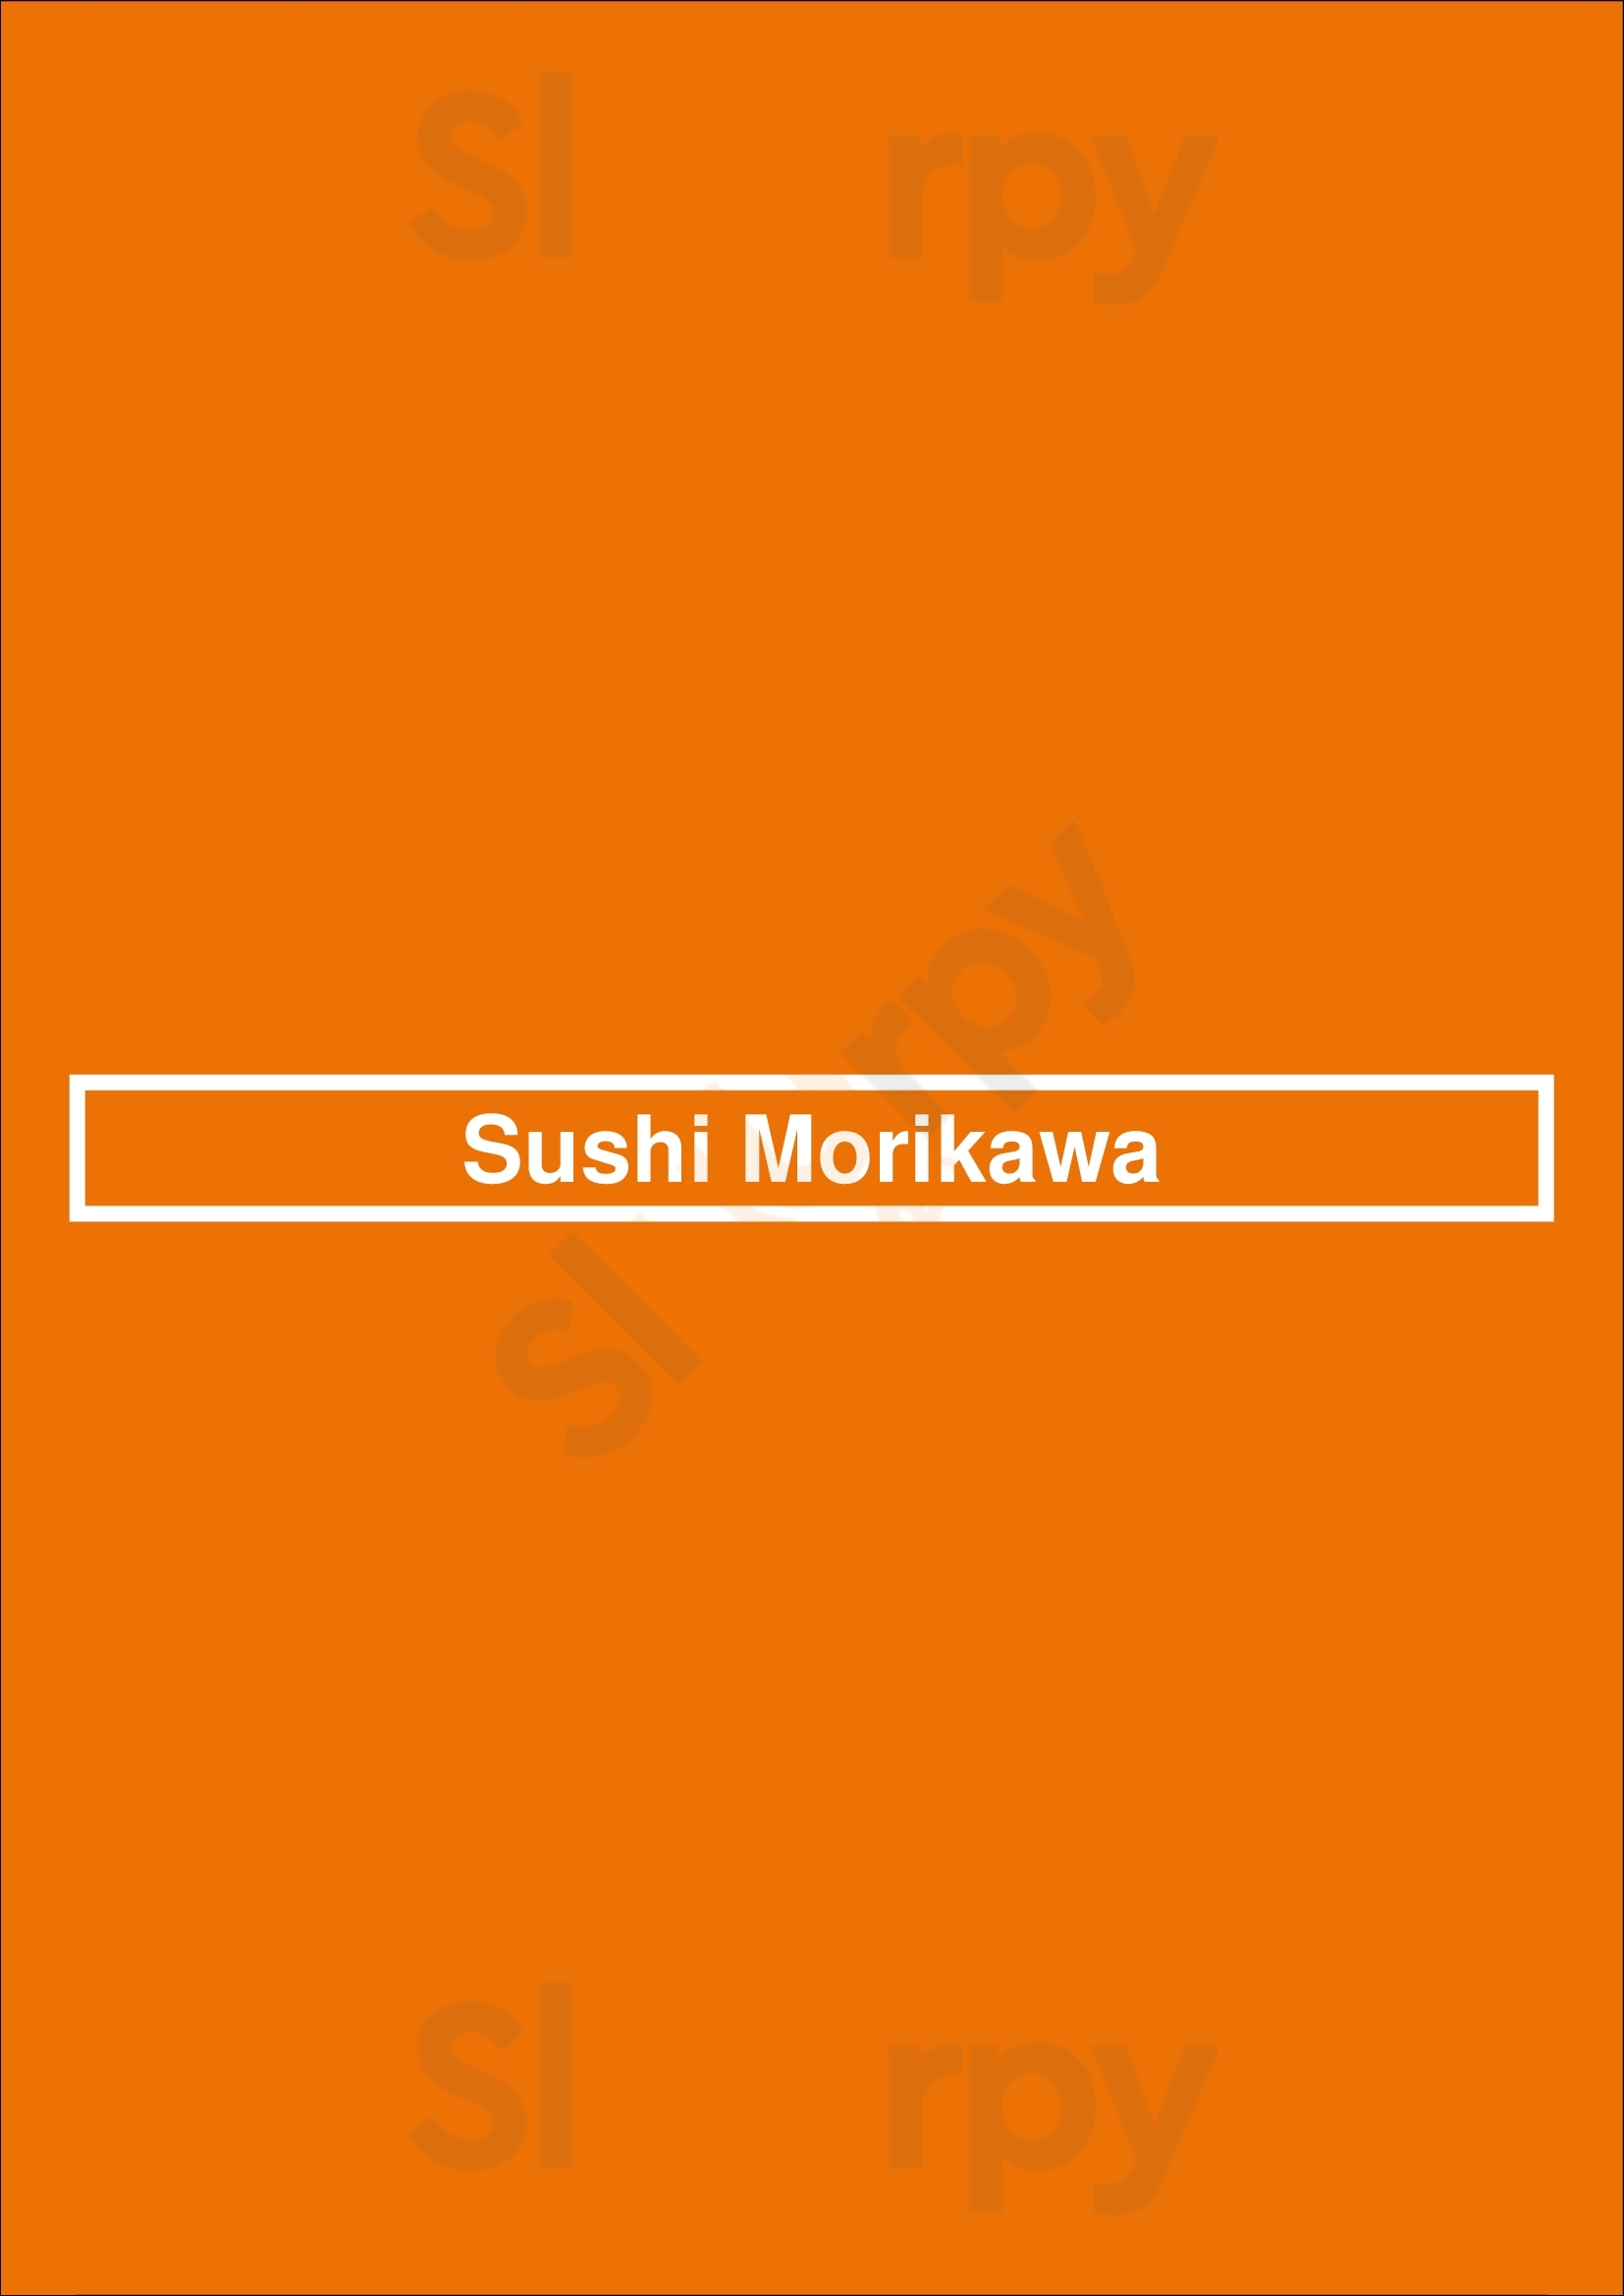 Sushi Morikawa Den Haag Menu - 1